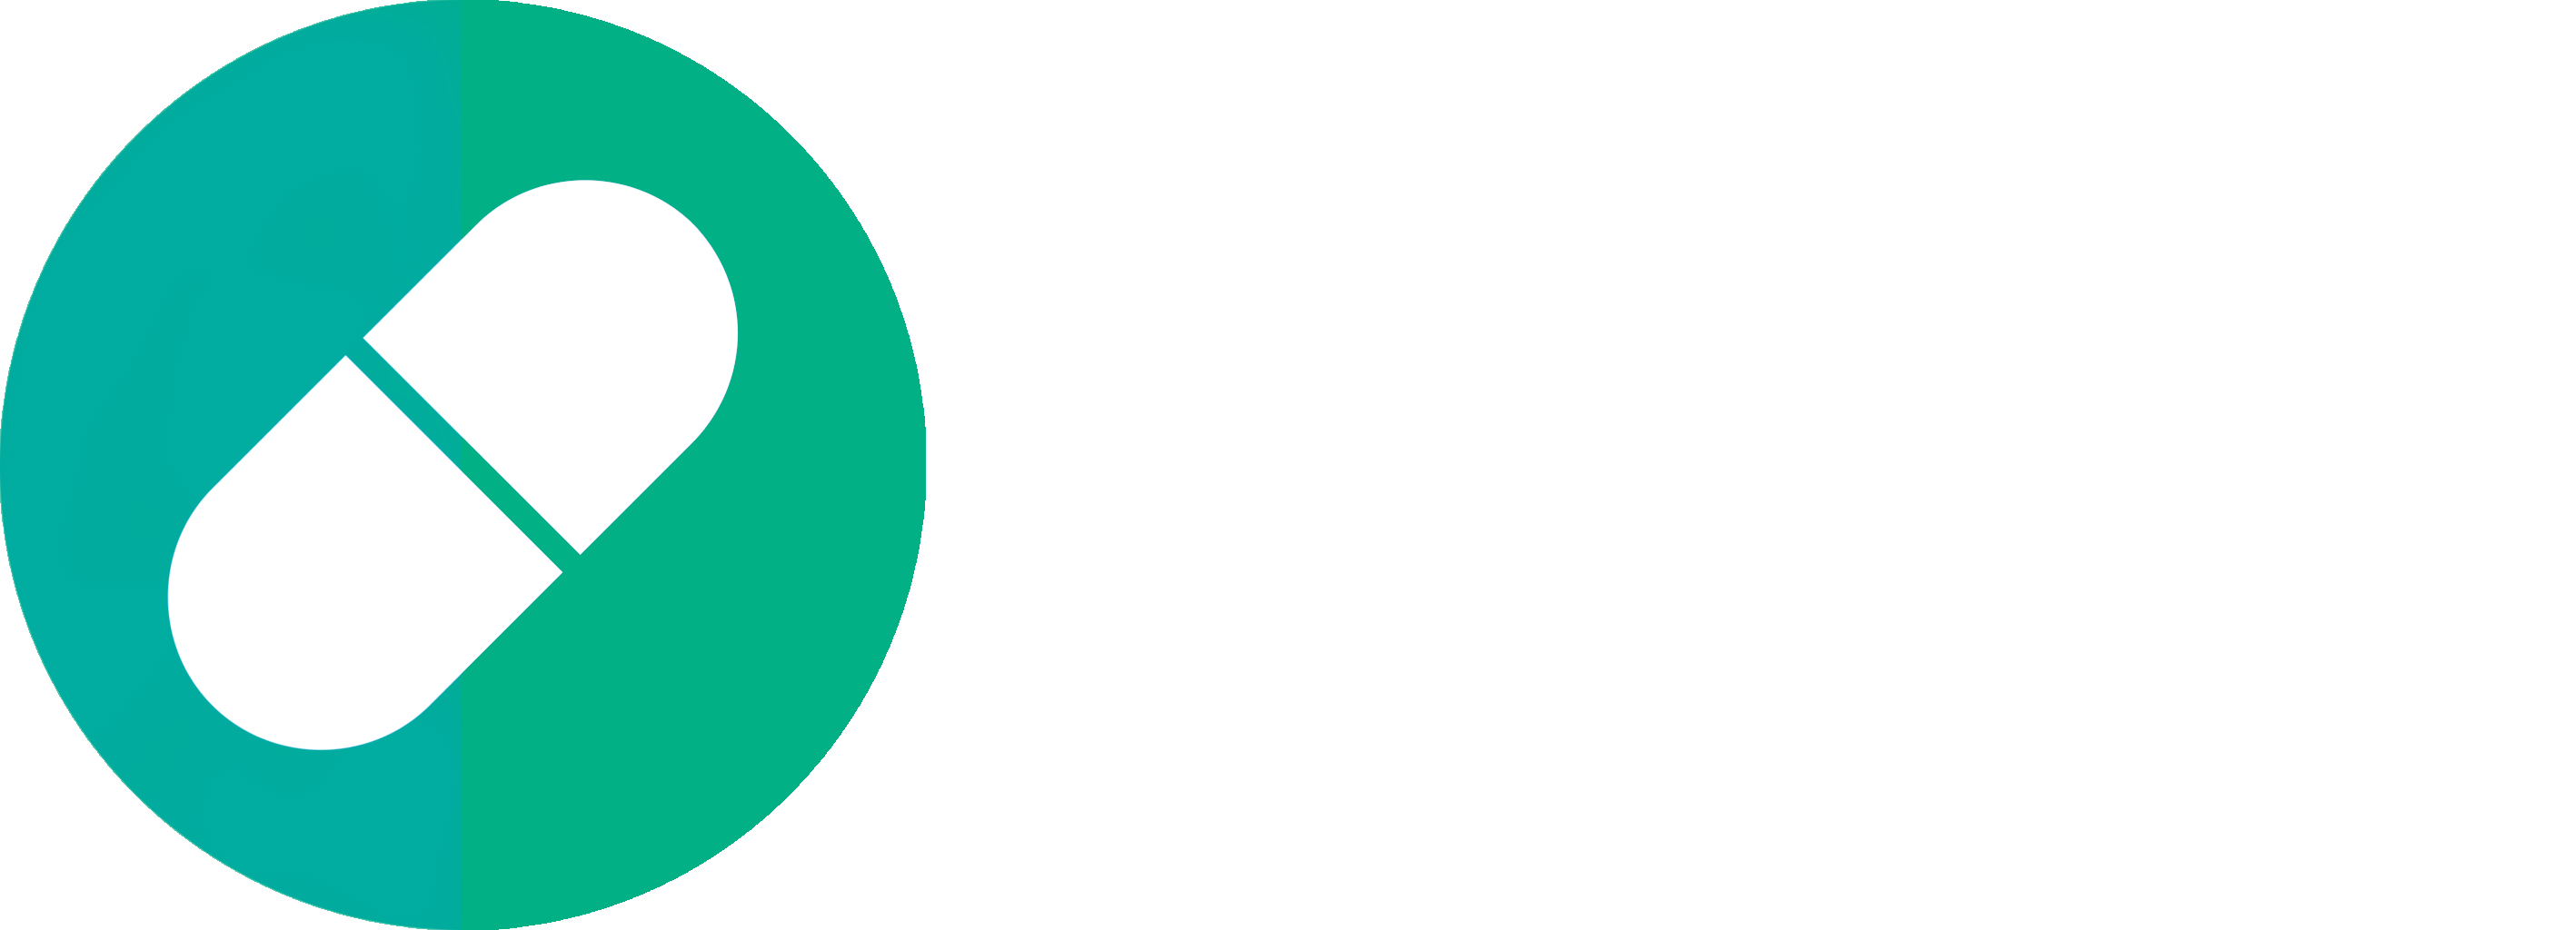 chothuochcm.com